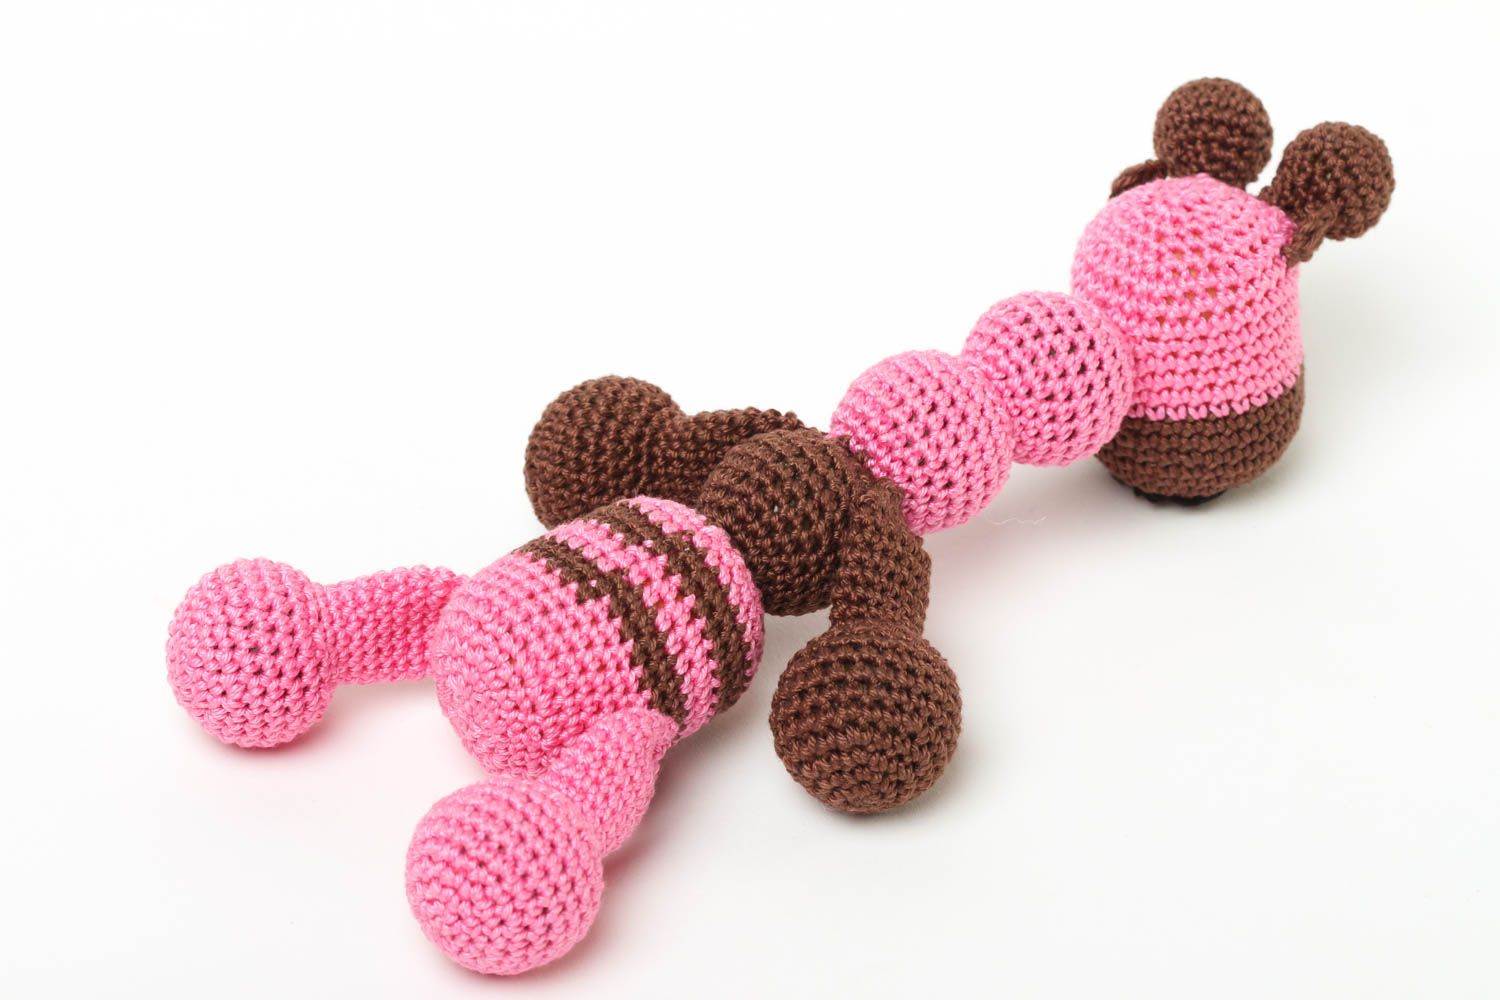 Handmade rattle toy designer toy for new born babies soft toys nursery decor photo 3